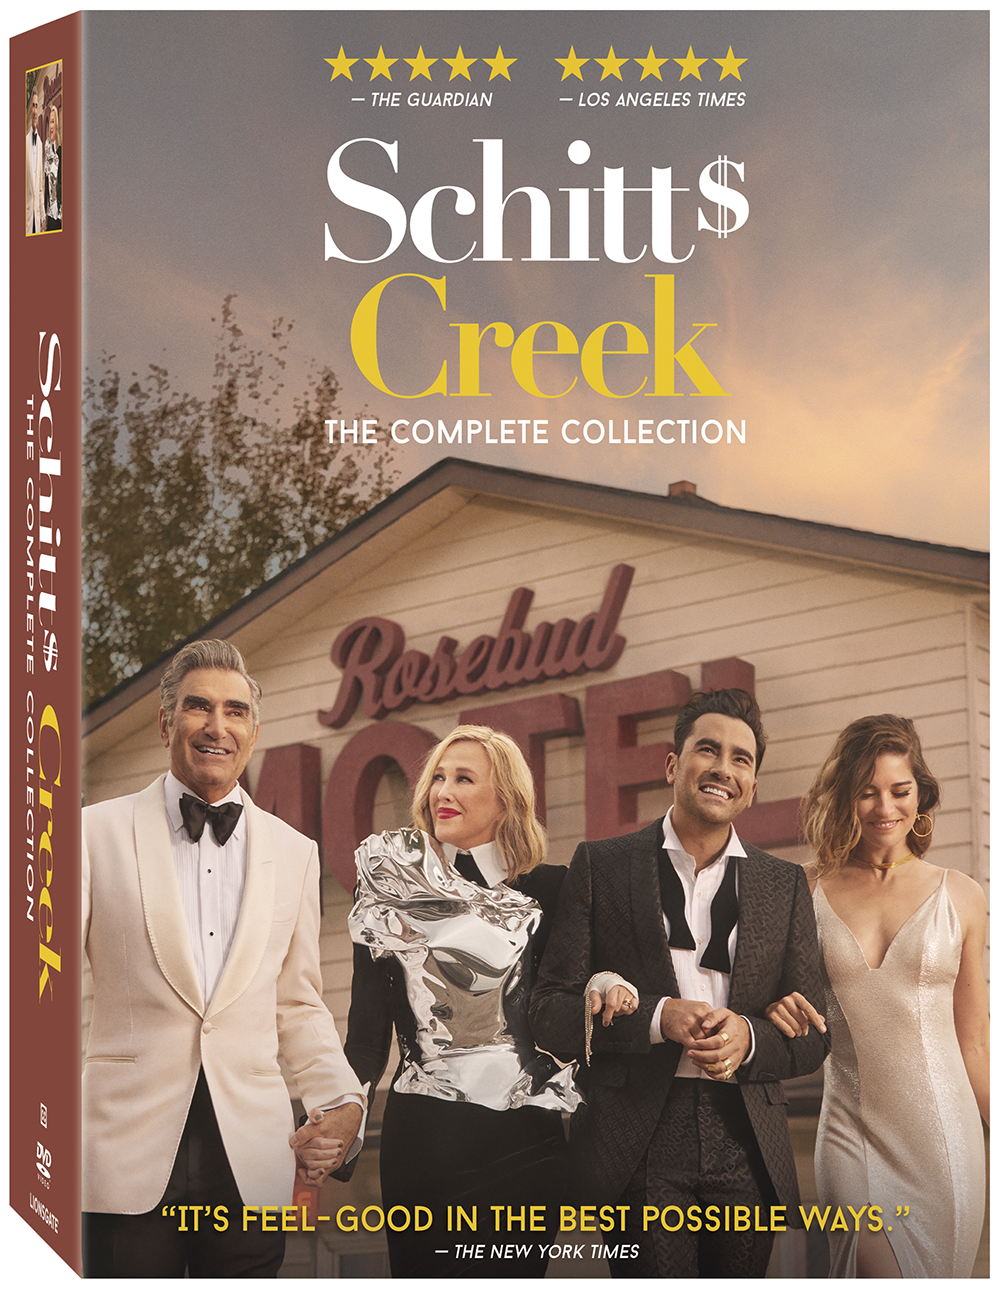 Schitt's Creek on DVD via Lionsgate